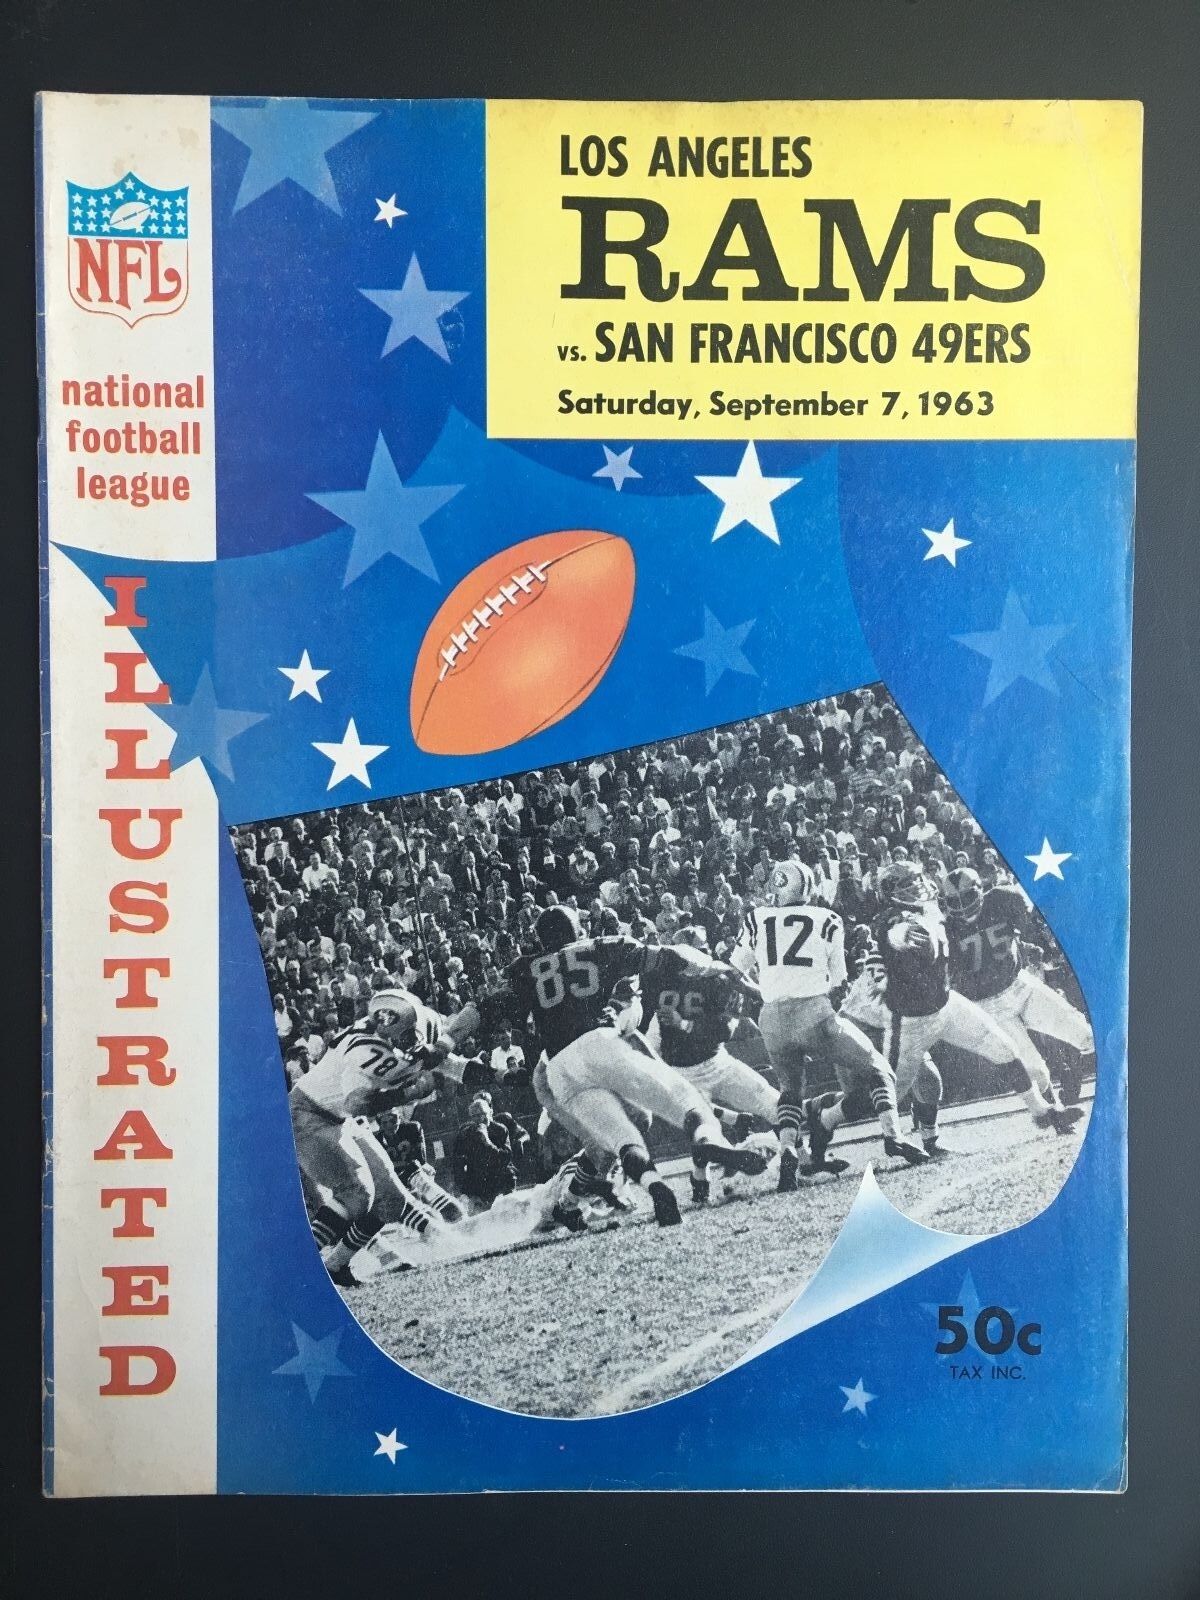 NFL Illustrated Los Angeles Rams vs. SF 49ers Football Program September 7, 1963